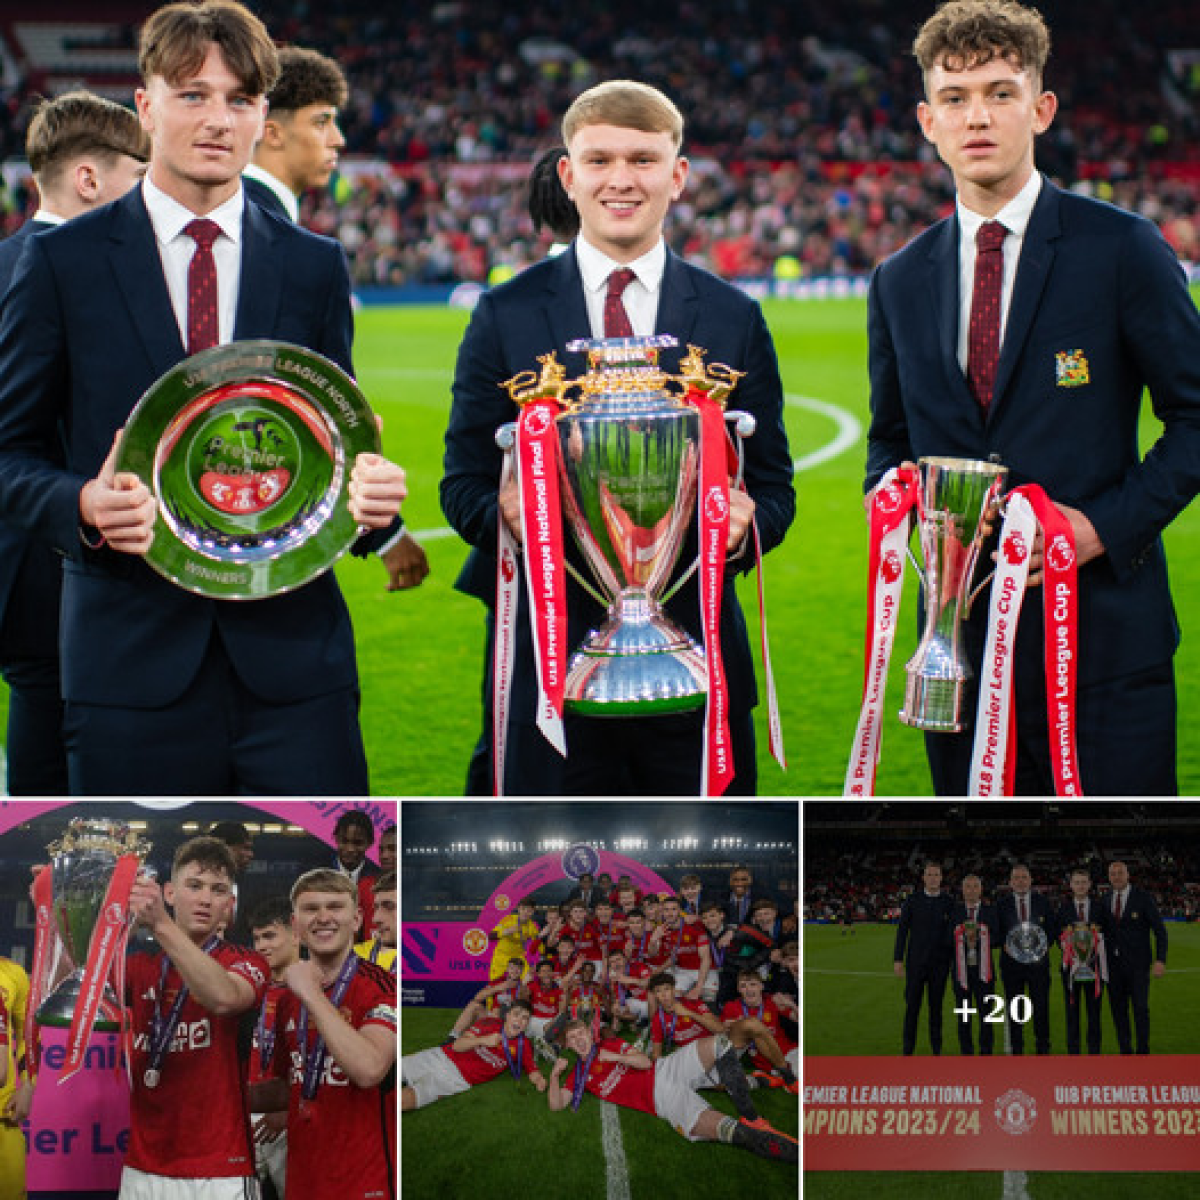 Manchester United U18s secure treble with a Premier League National ...